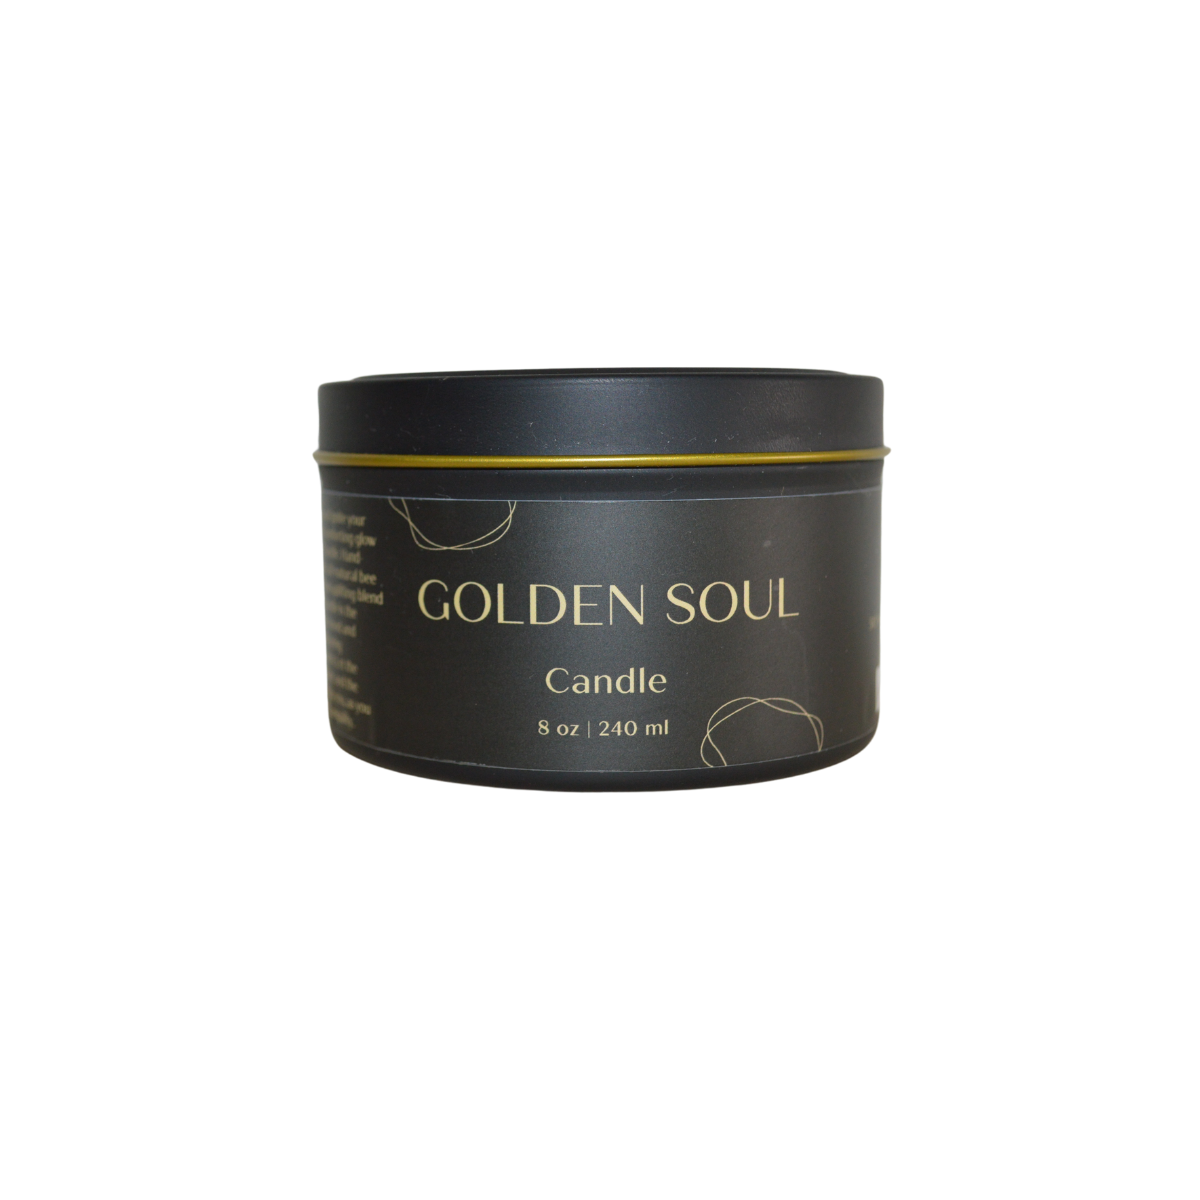 Golden Soul Candle